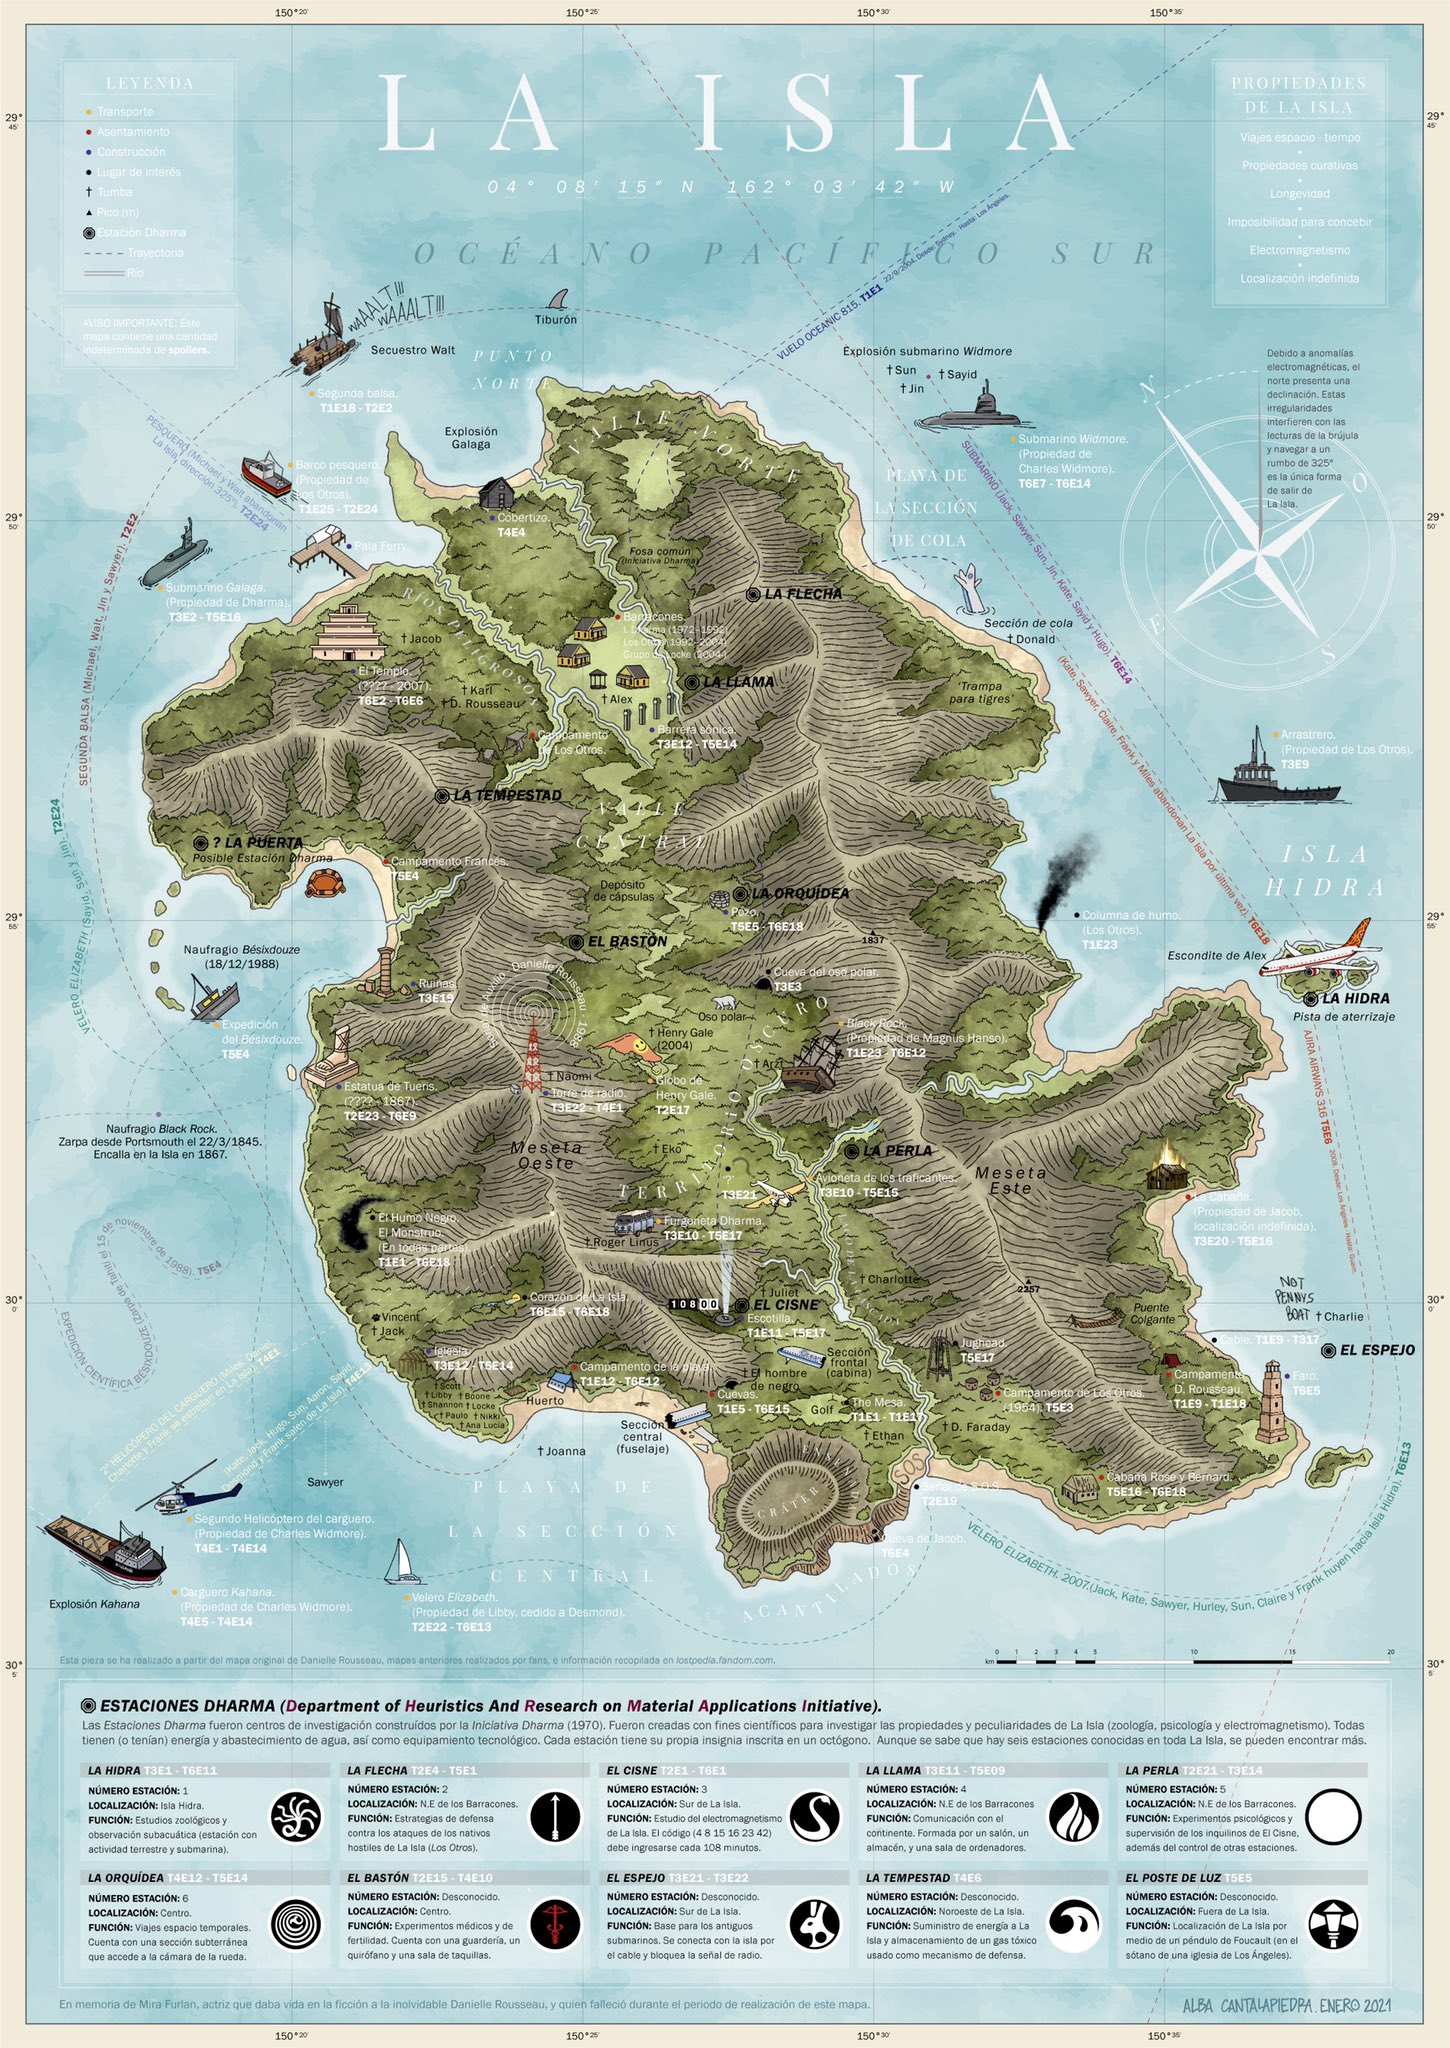 LOST - La isla. Mapa creado por @albaricoque_acg